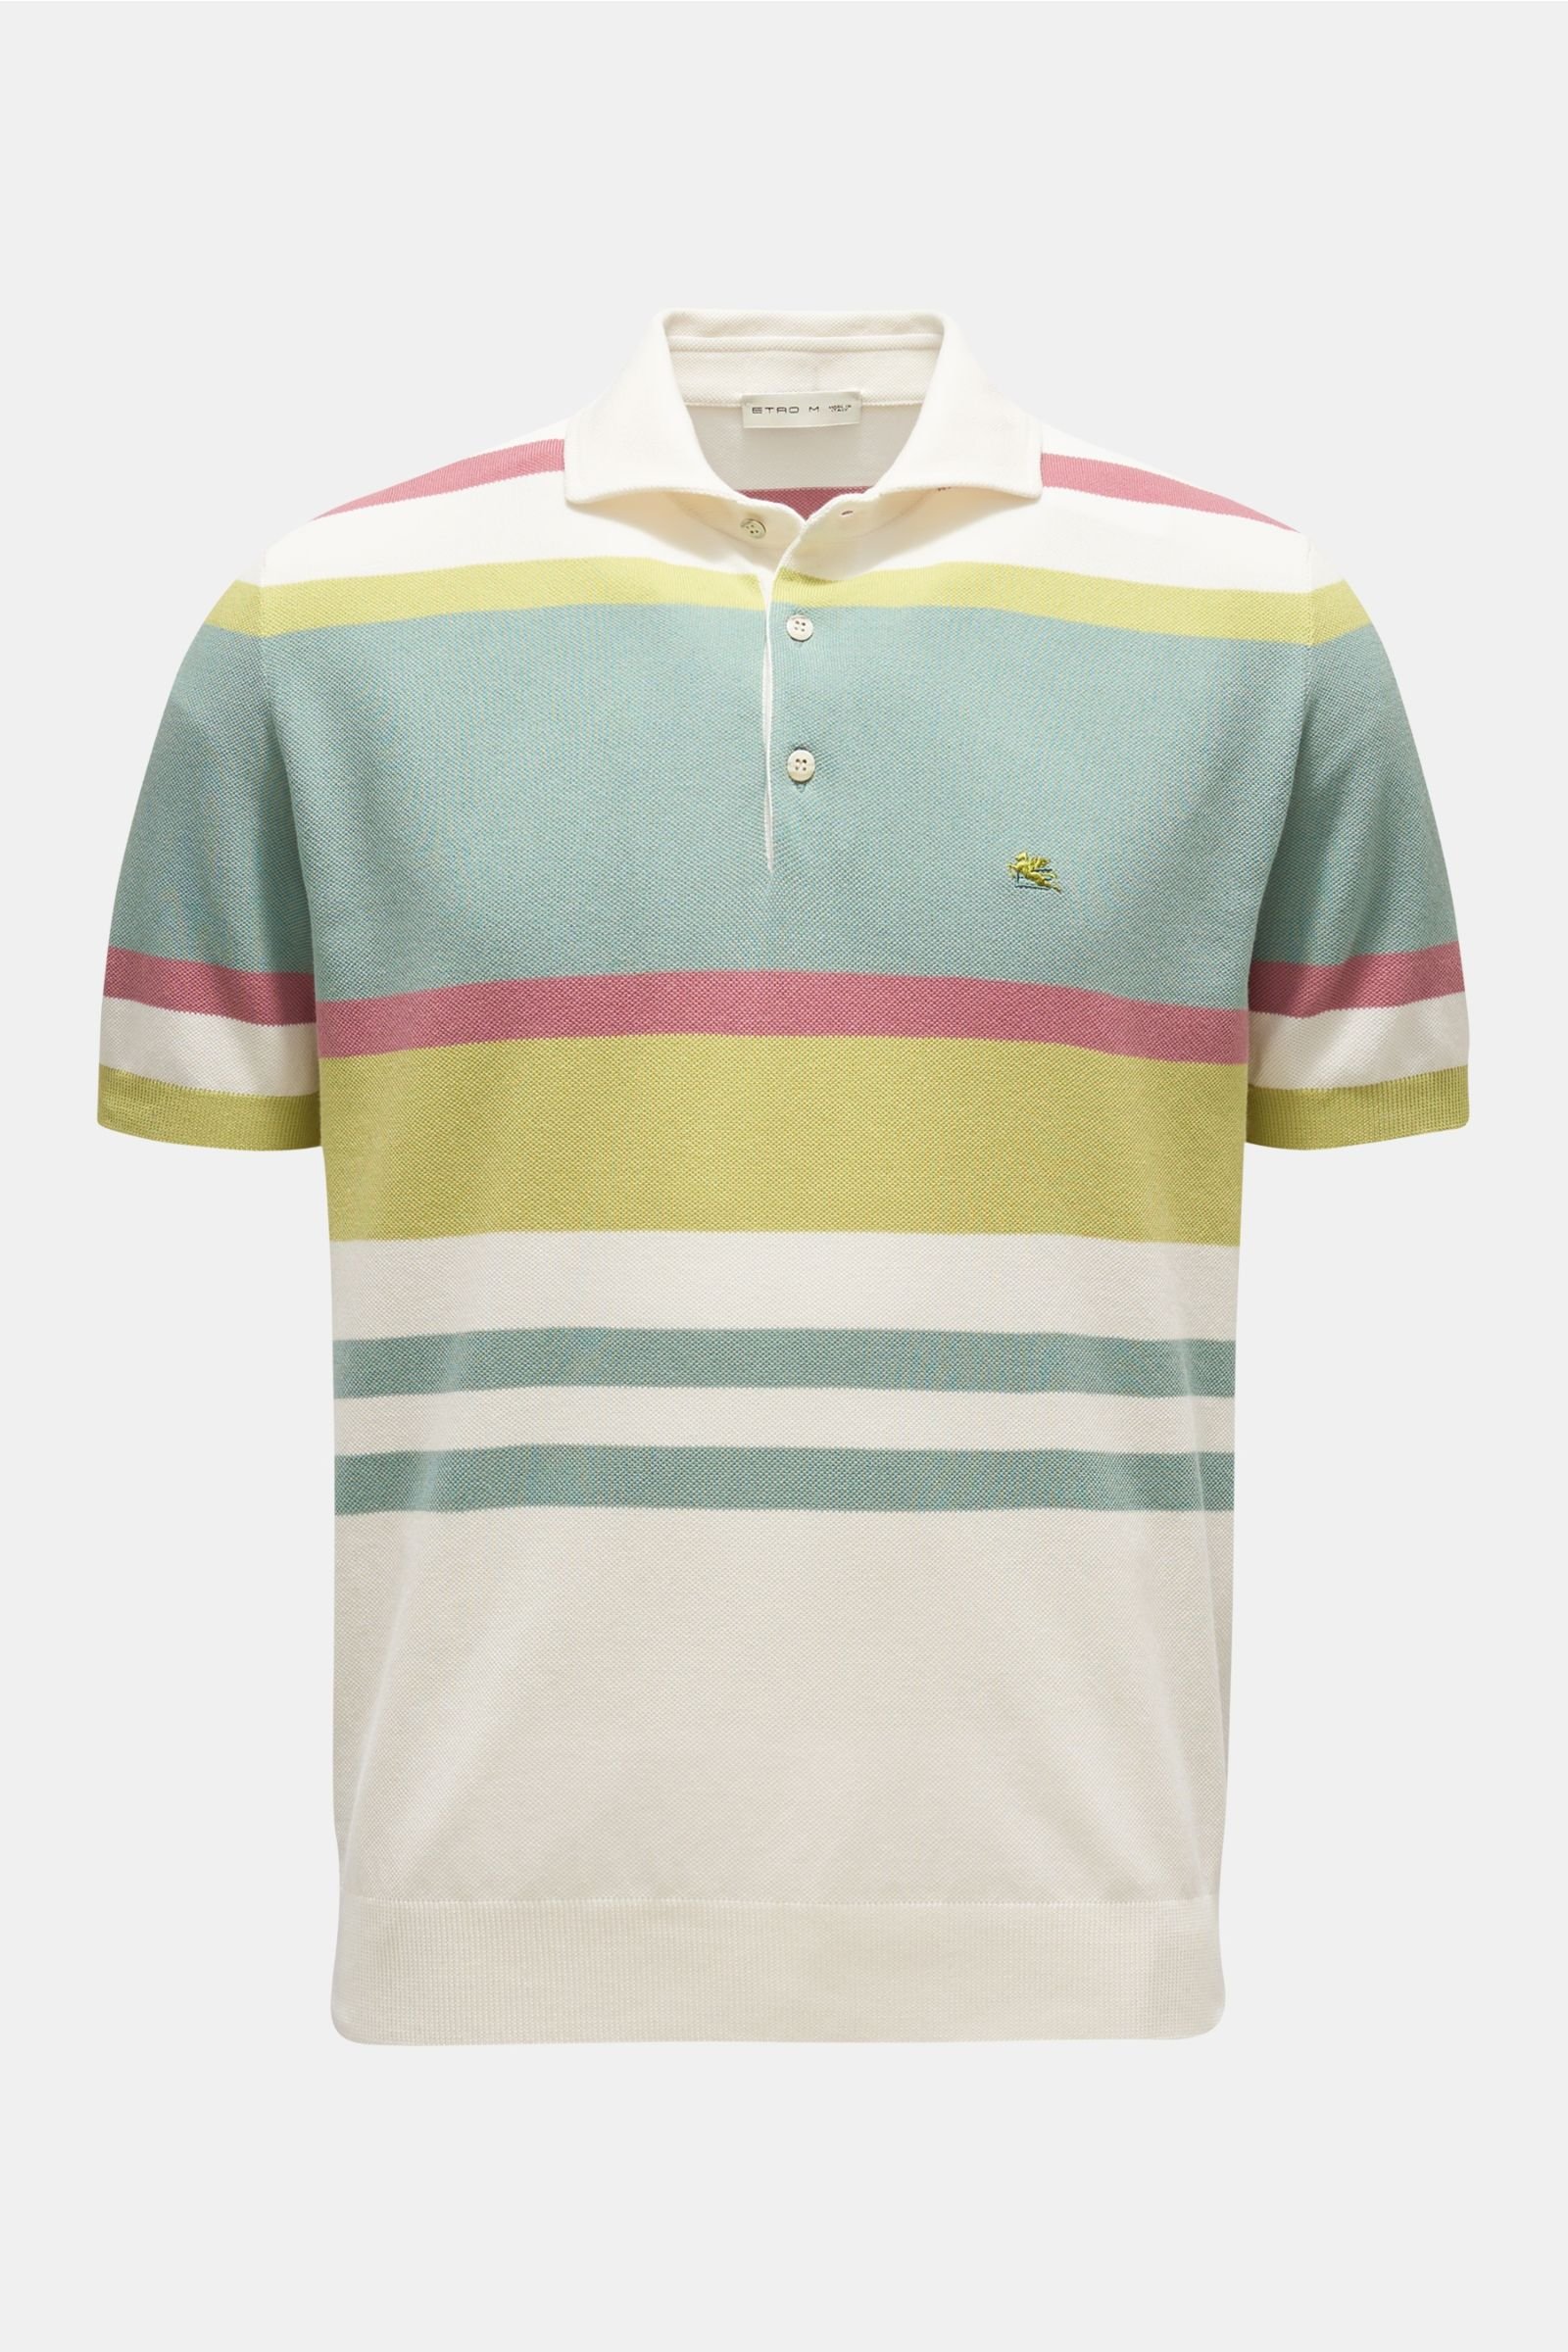 Polo shirt cream/light green striped